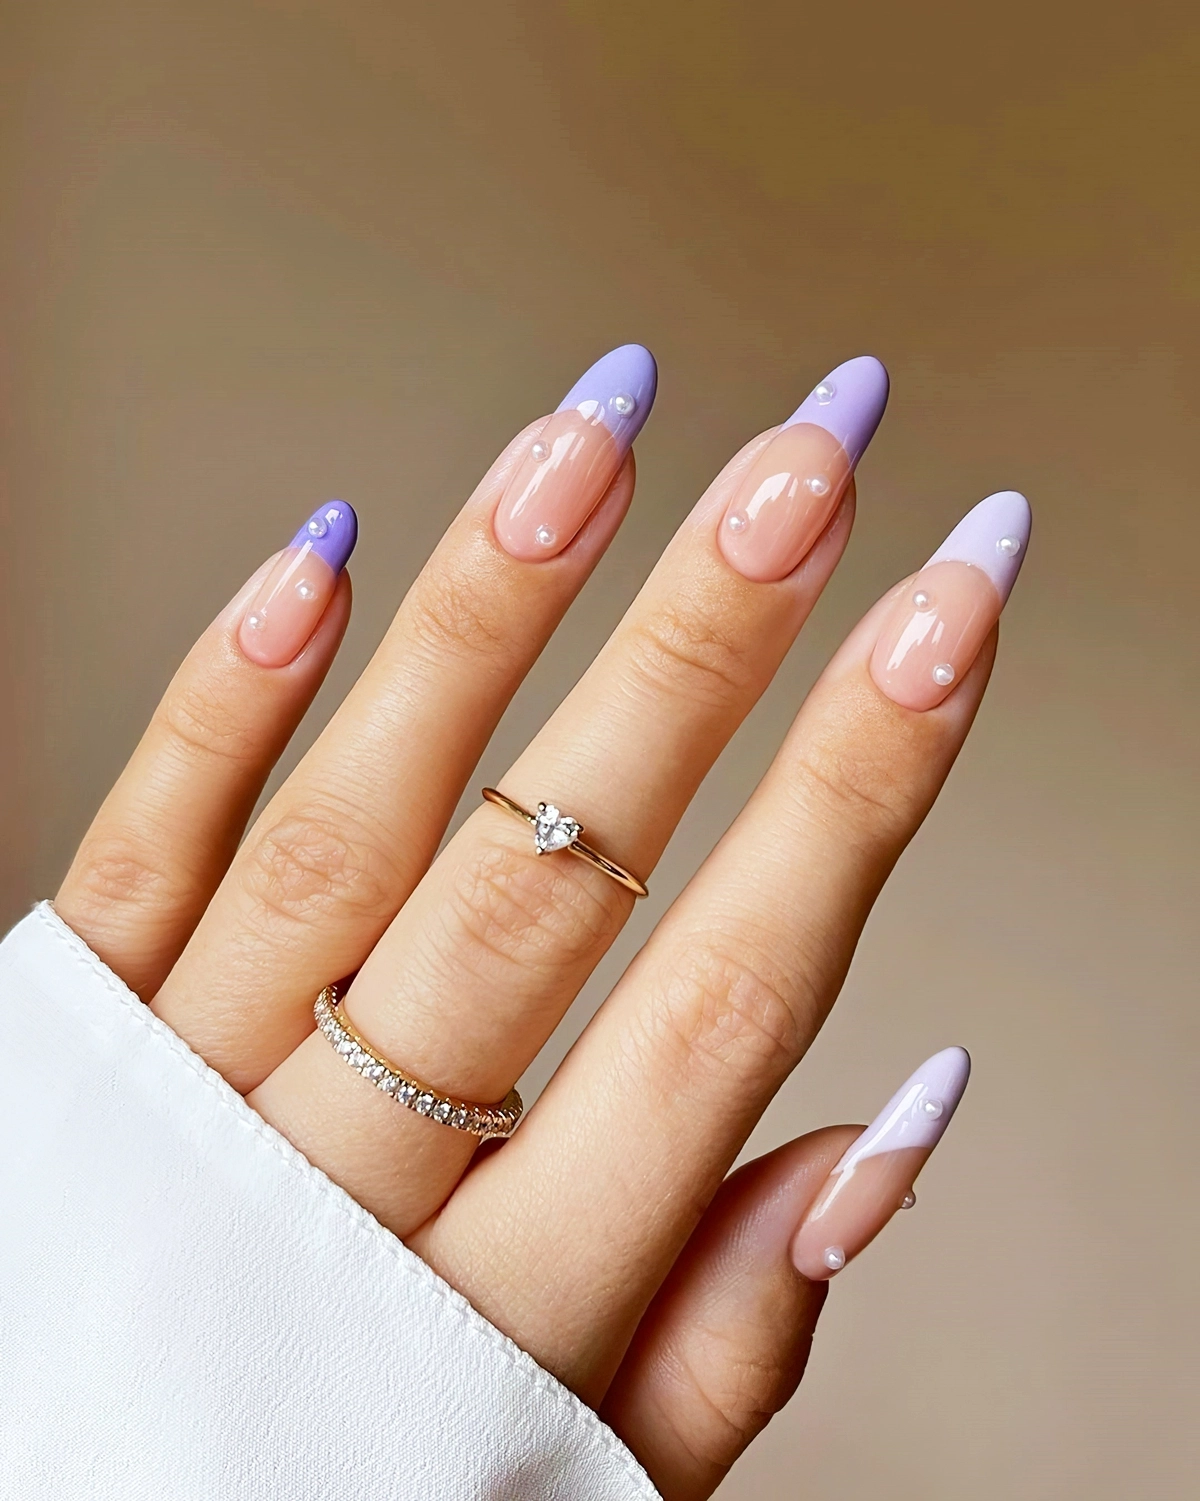 gelnaegel lila farbe french nails lavendel tiffanyabbigailebeauty